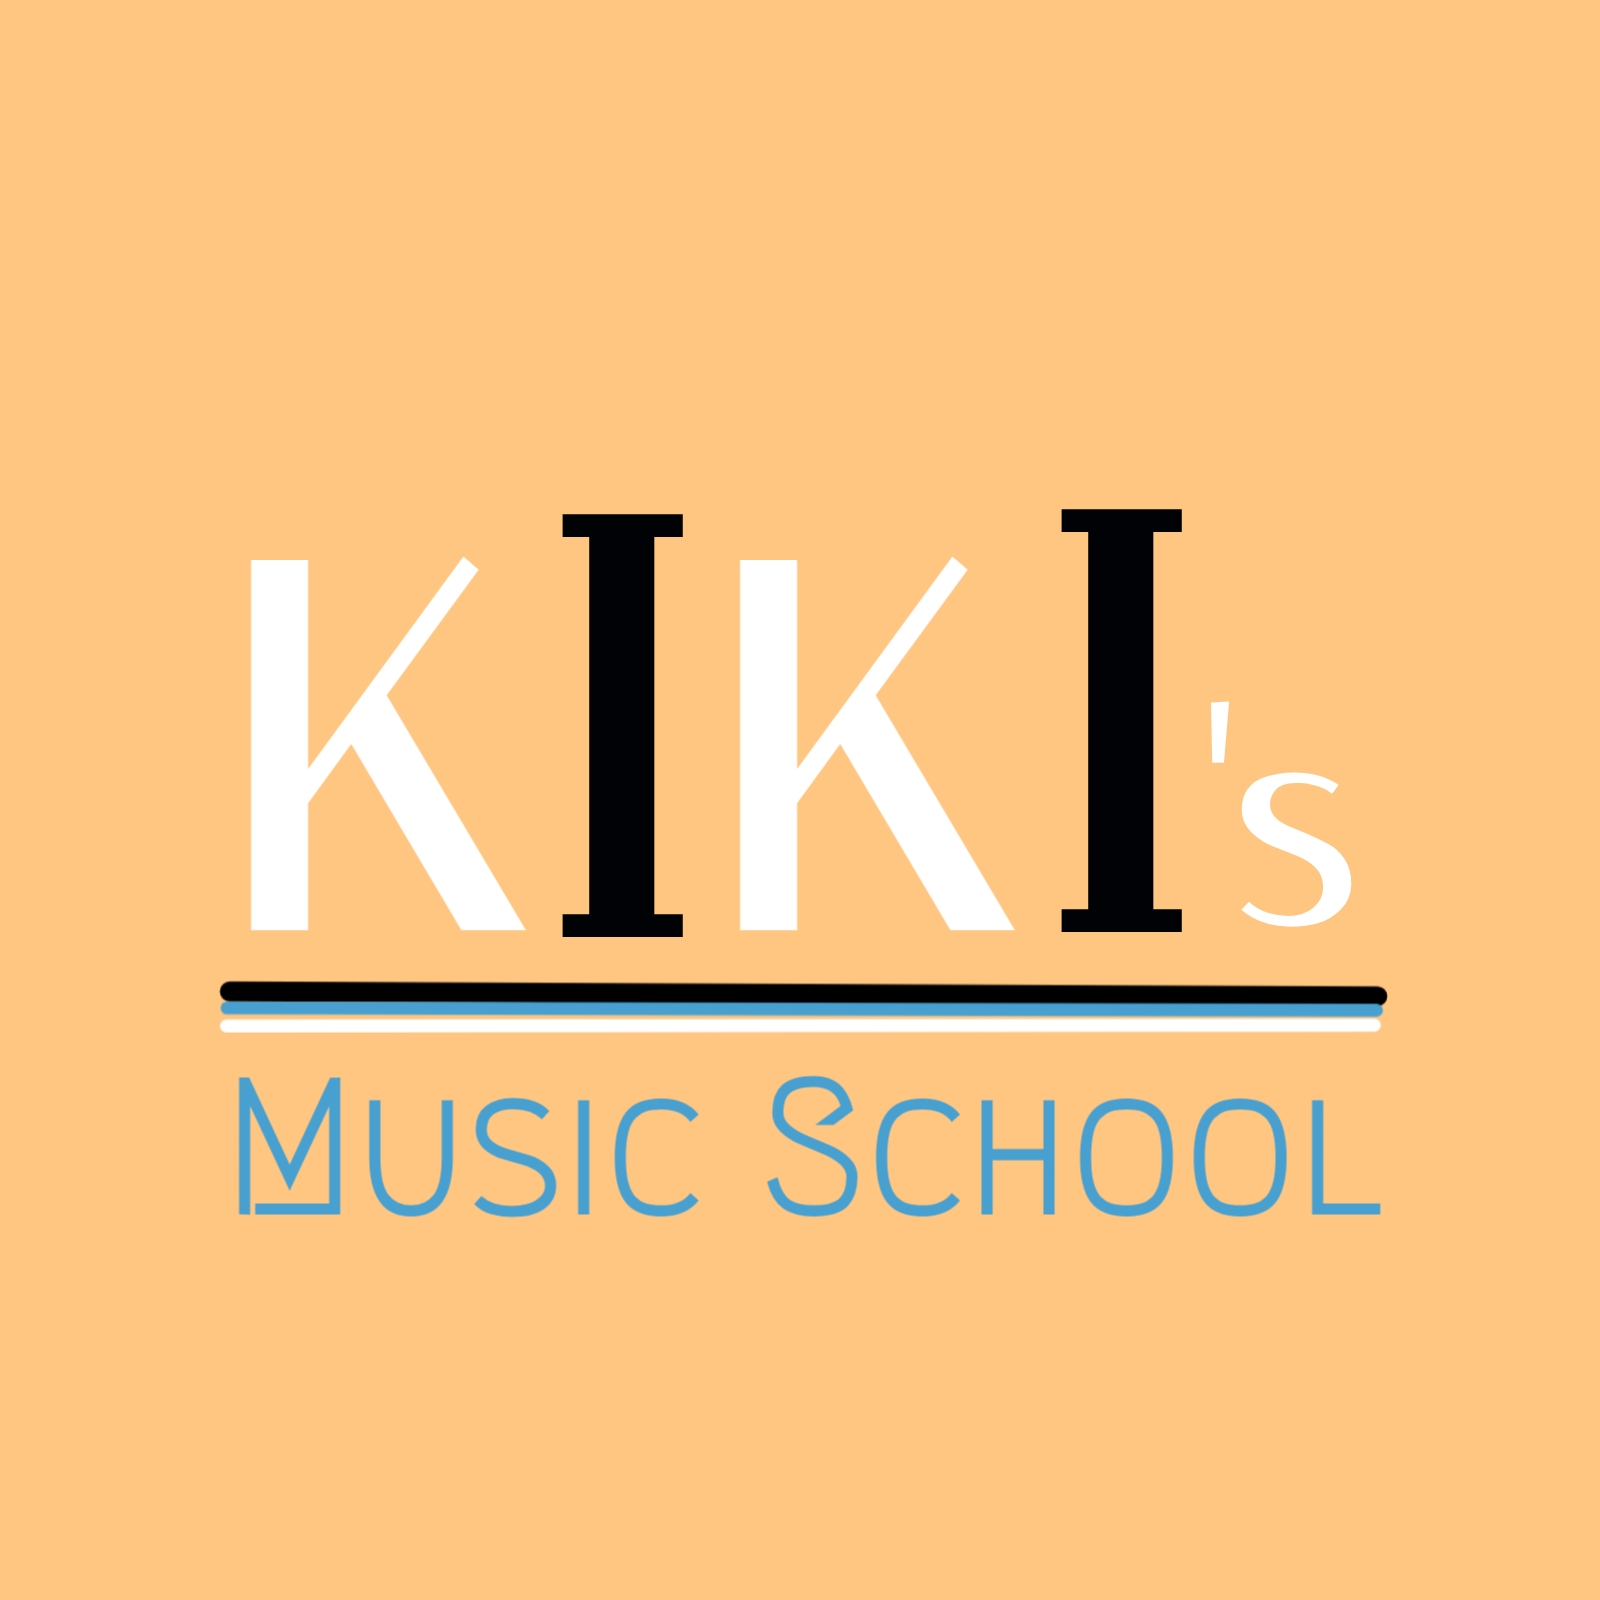 kikis music school logo